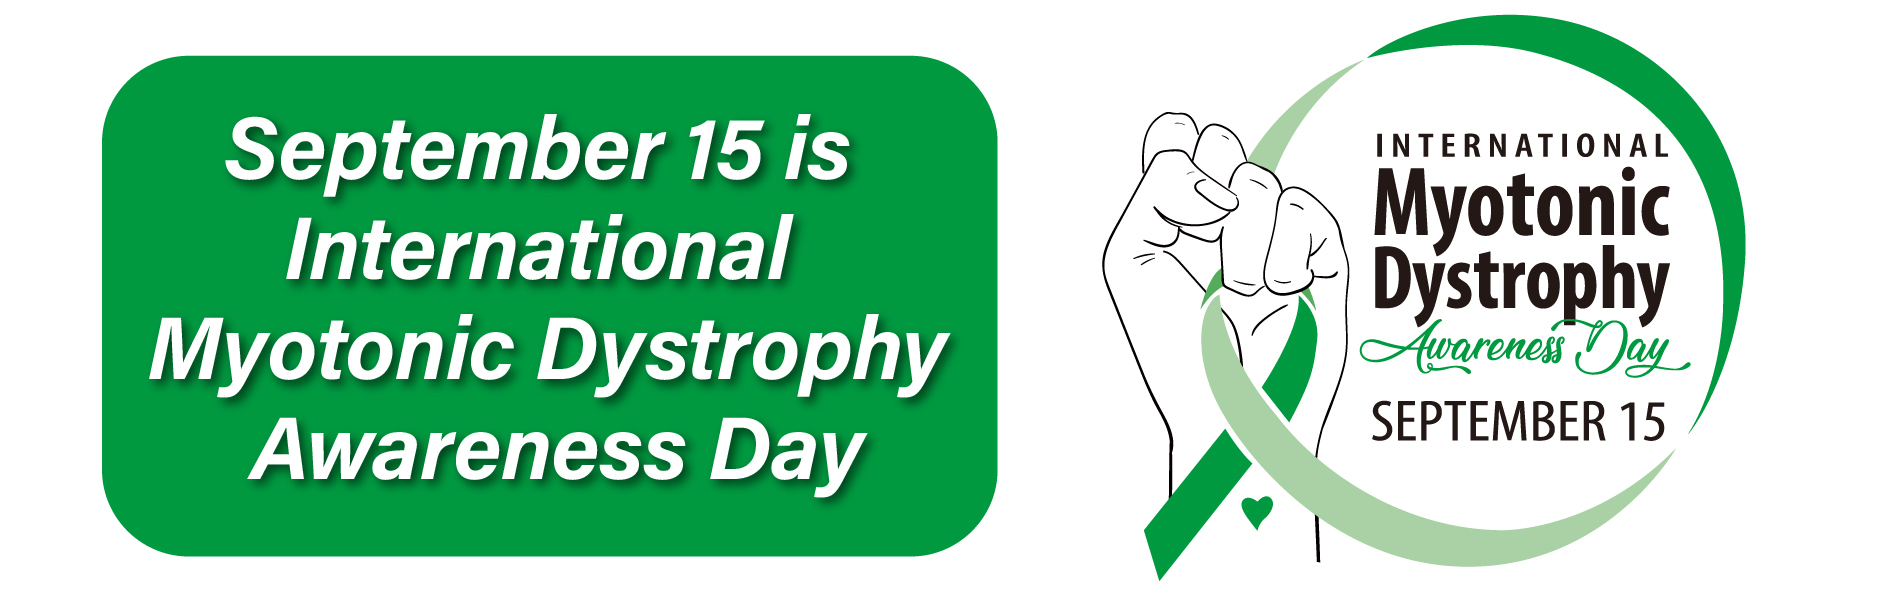 September 15 is International Myotonic Dystrophy Awareness Day